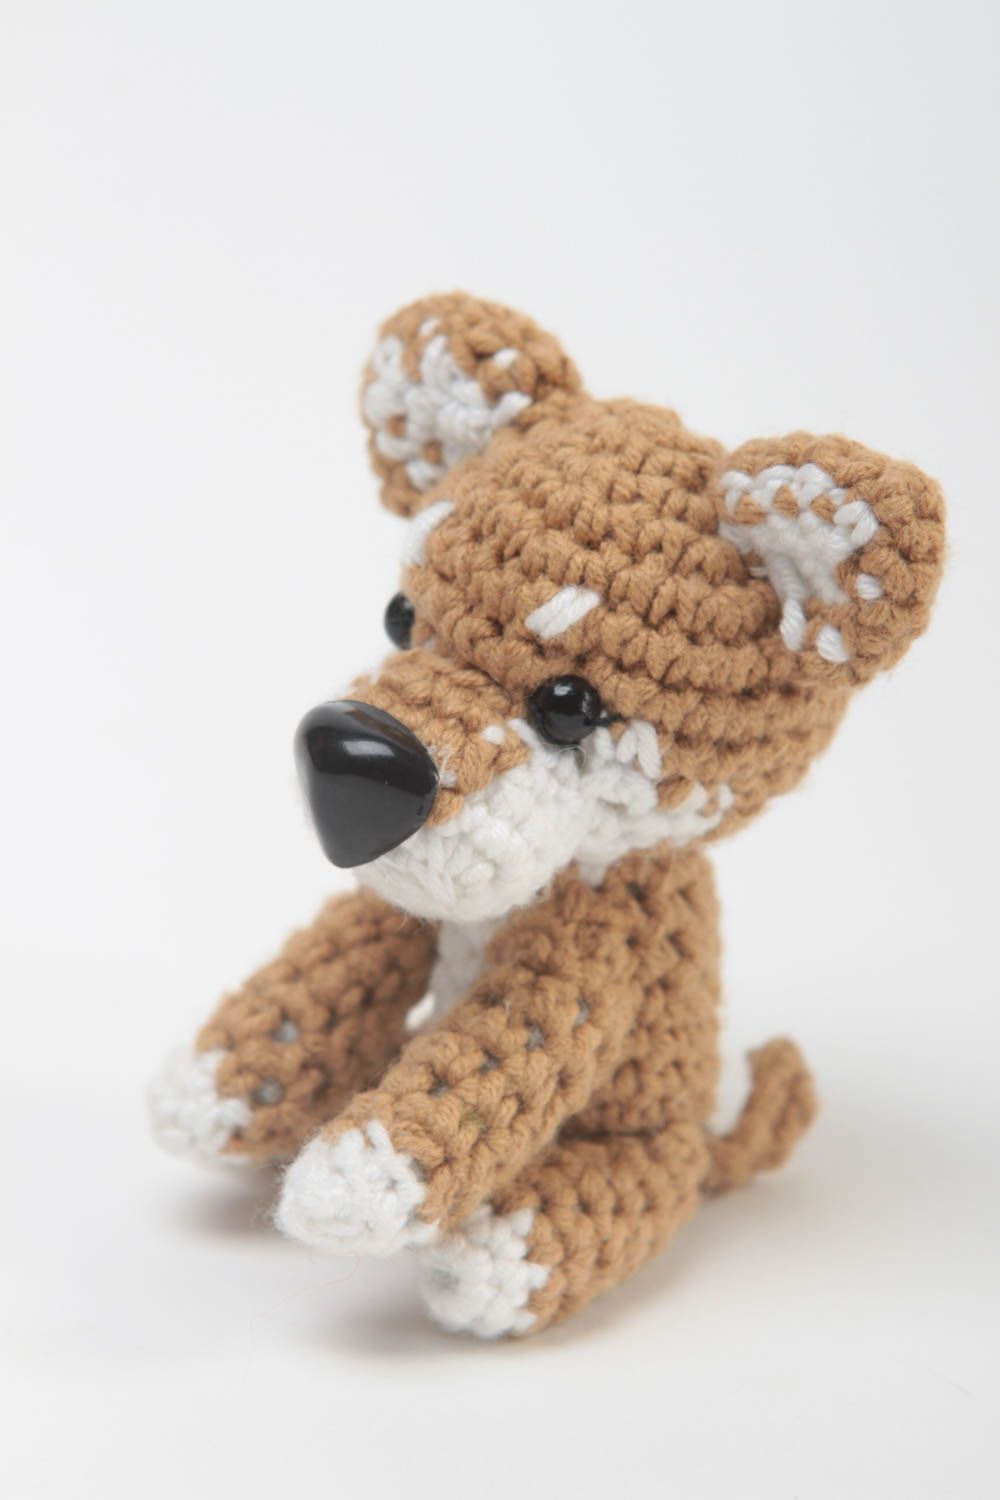 Miniature handmade soft toy crochet toy stuffed toy birthday gift ideas photo 2